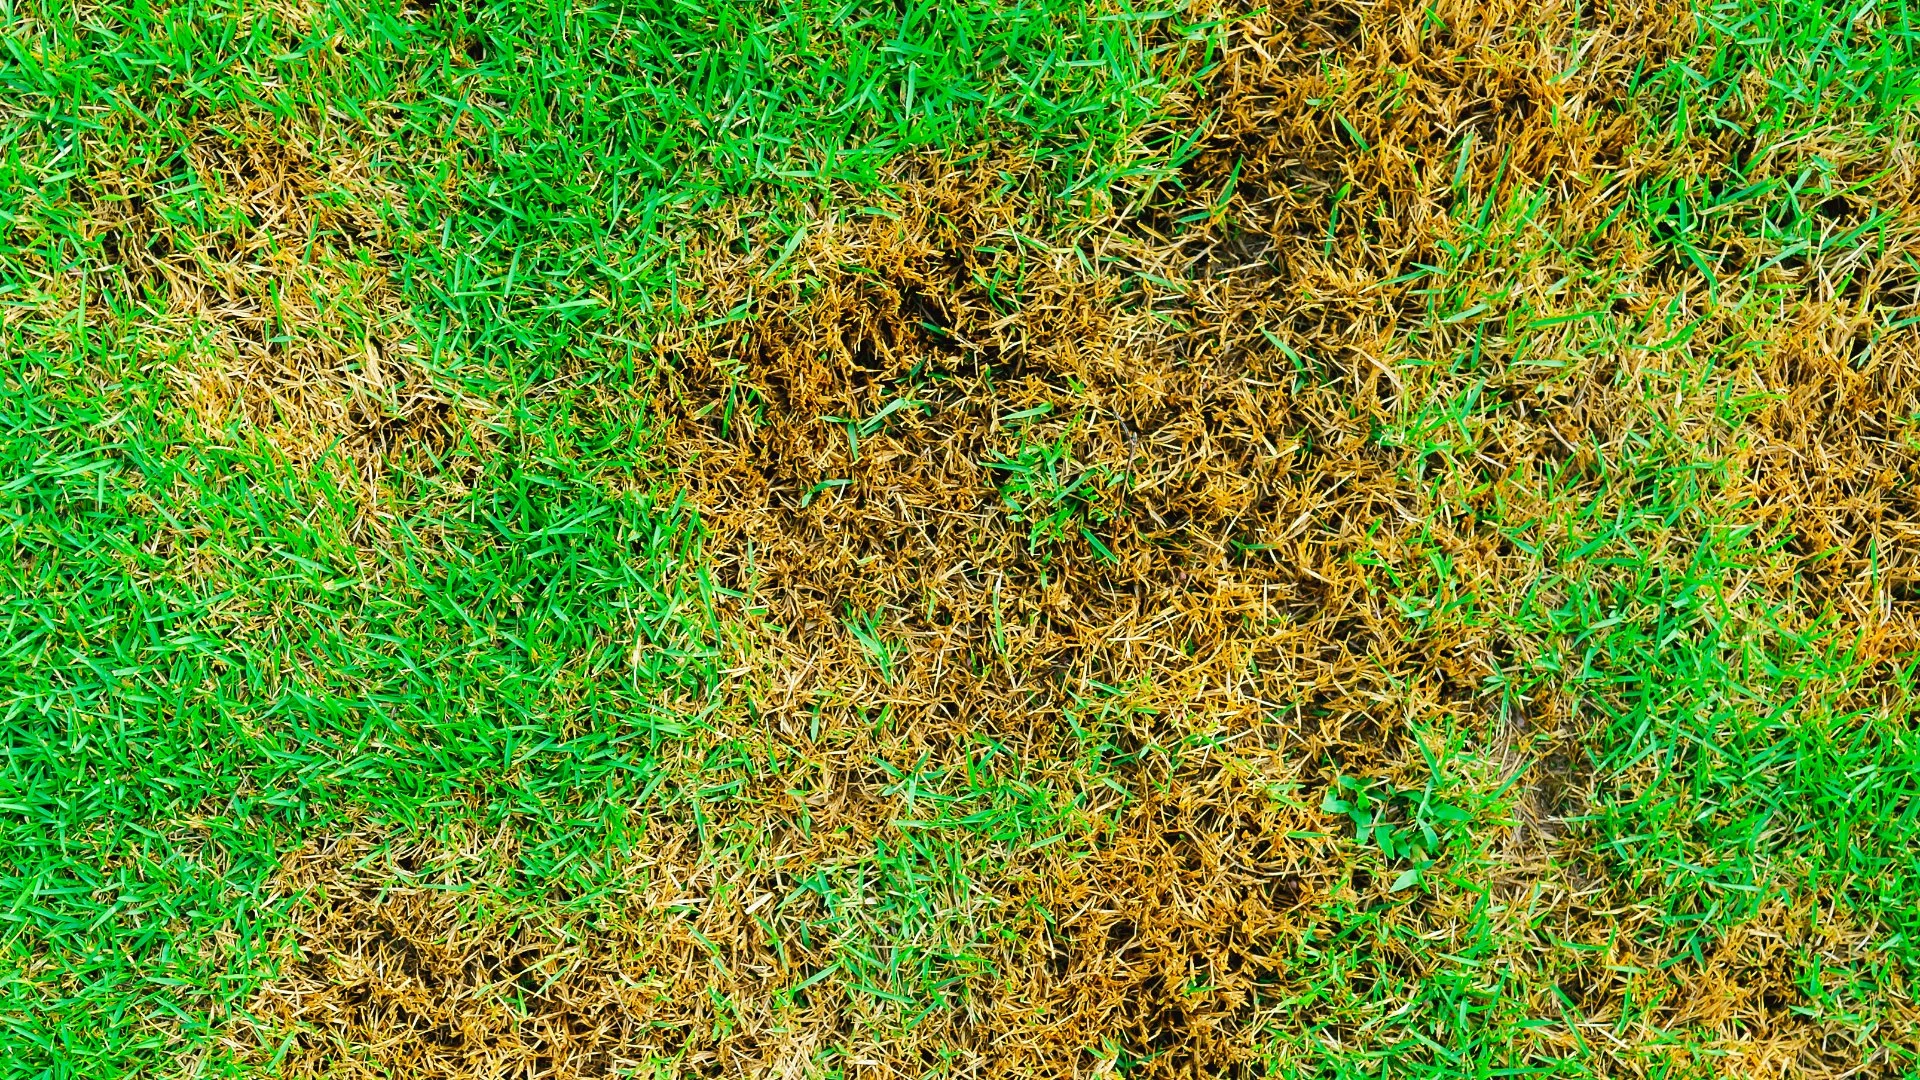 Diagnosing Your Brown Lawn - Dehydration, Over-Fertilization, or Turf Disease?